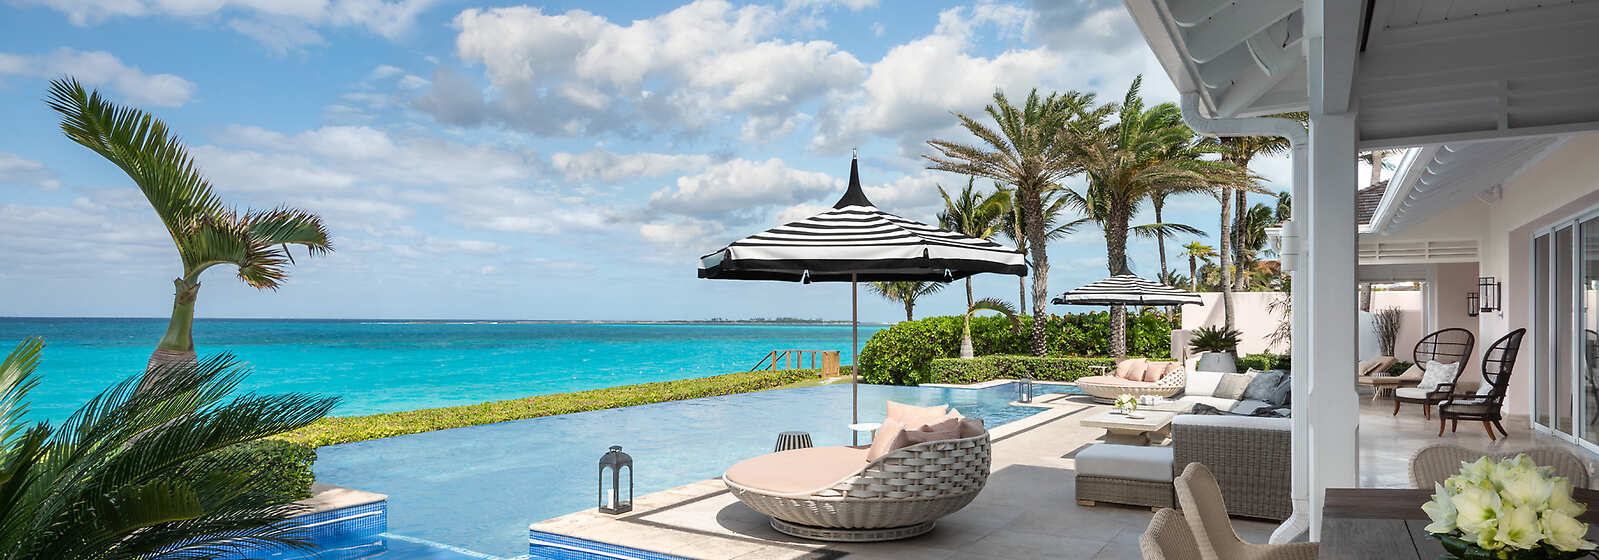 The Ocean Club, A Four Seasons Resort, Bahamas | Fine Hotels + Resorts |  Amex Travel